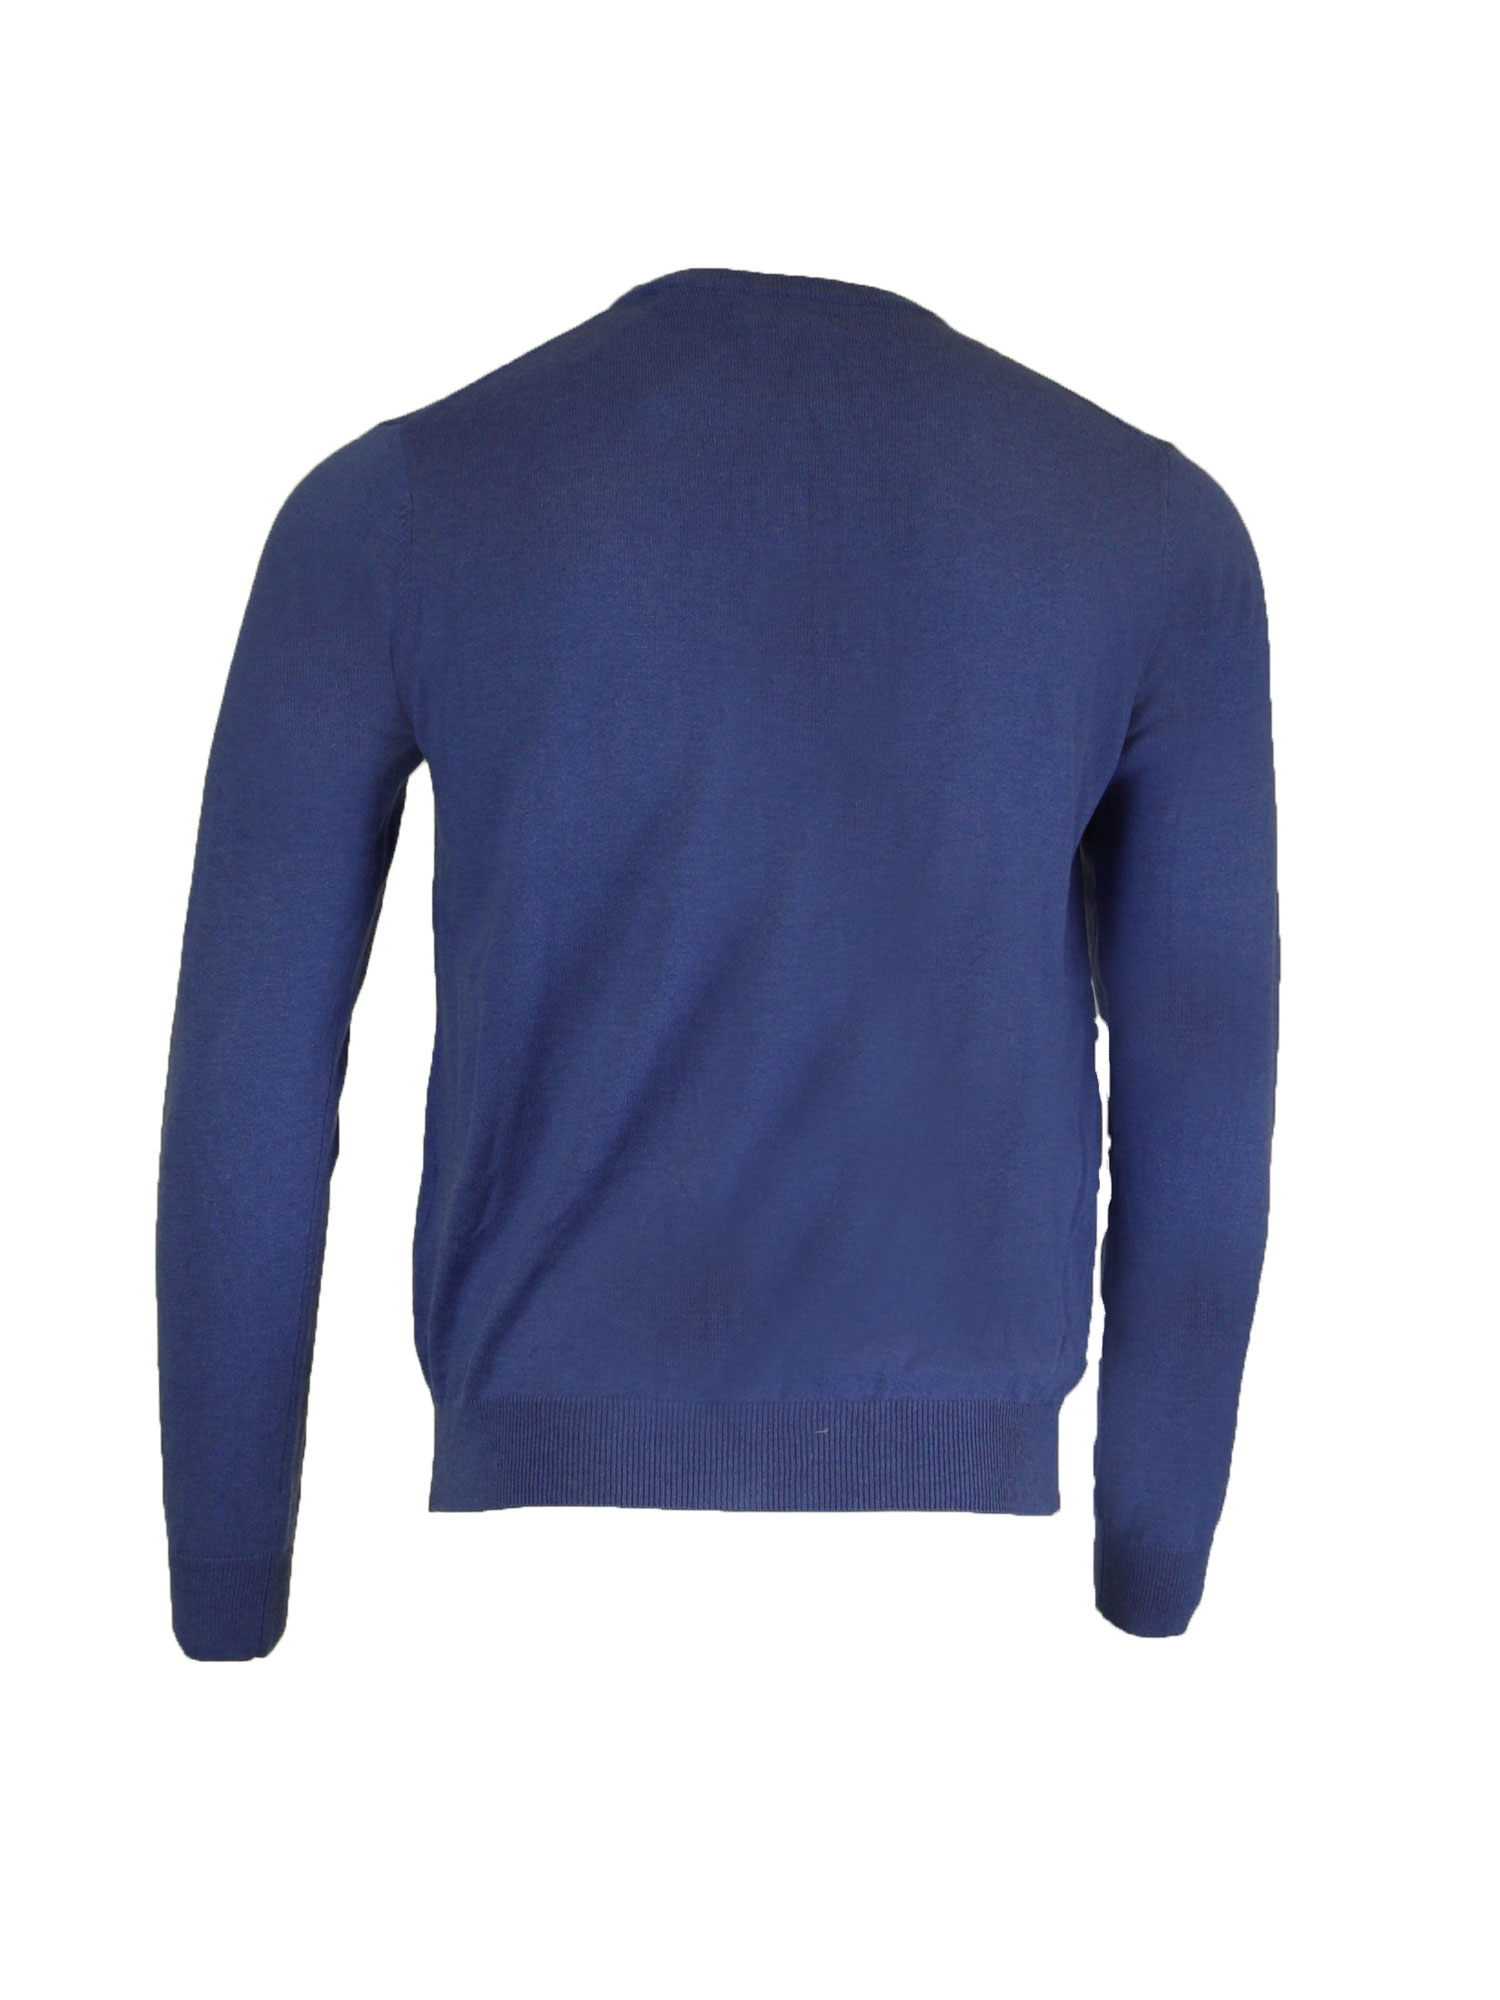 GANT Men's Cotton Wool Crew Neck Sweater 83101 Size Medium $130 NWT | eBay